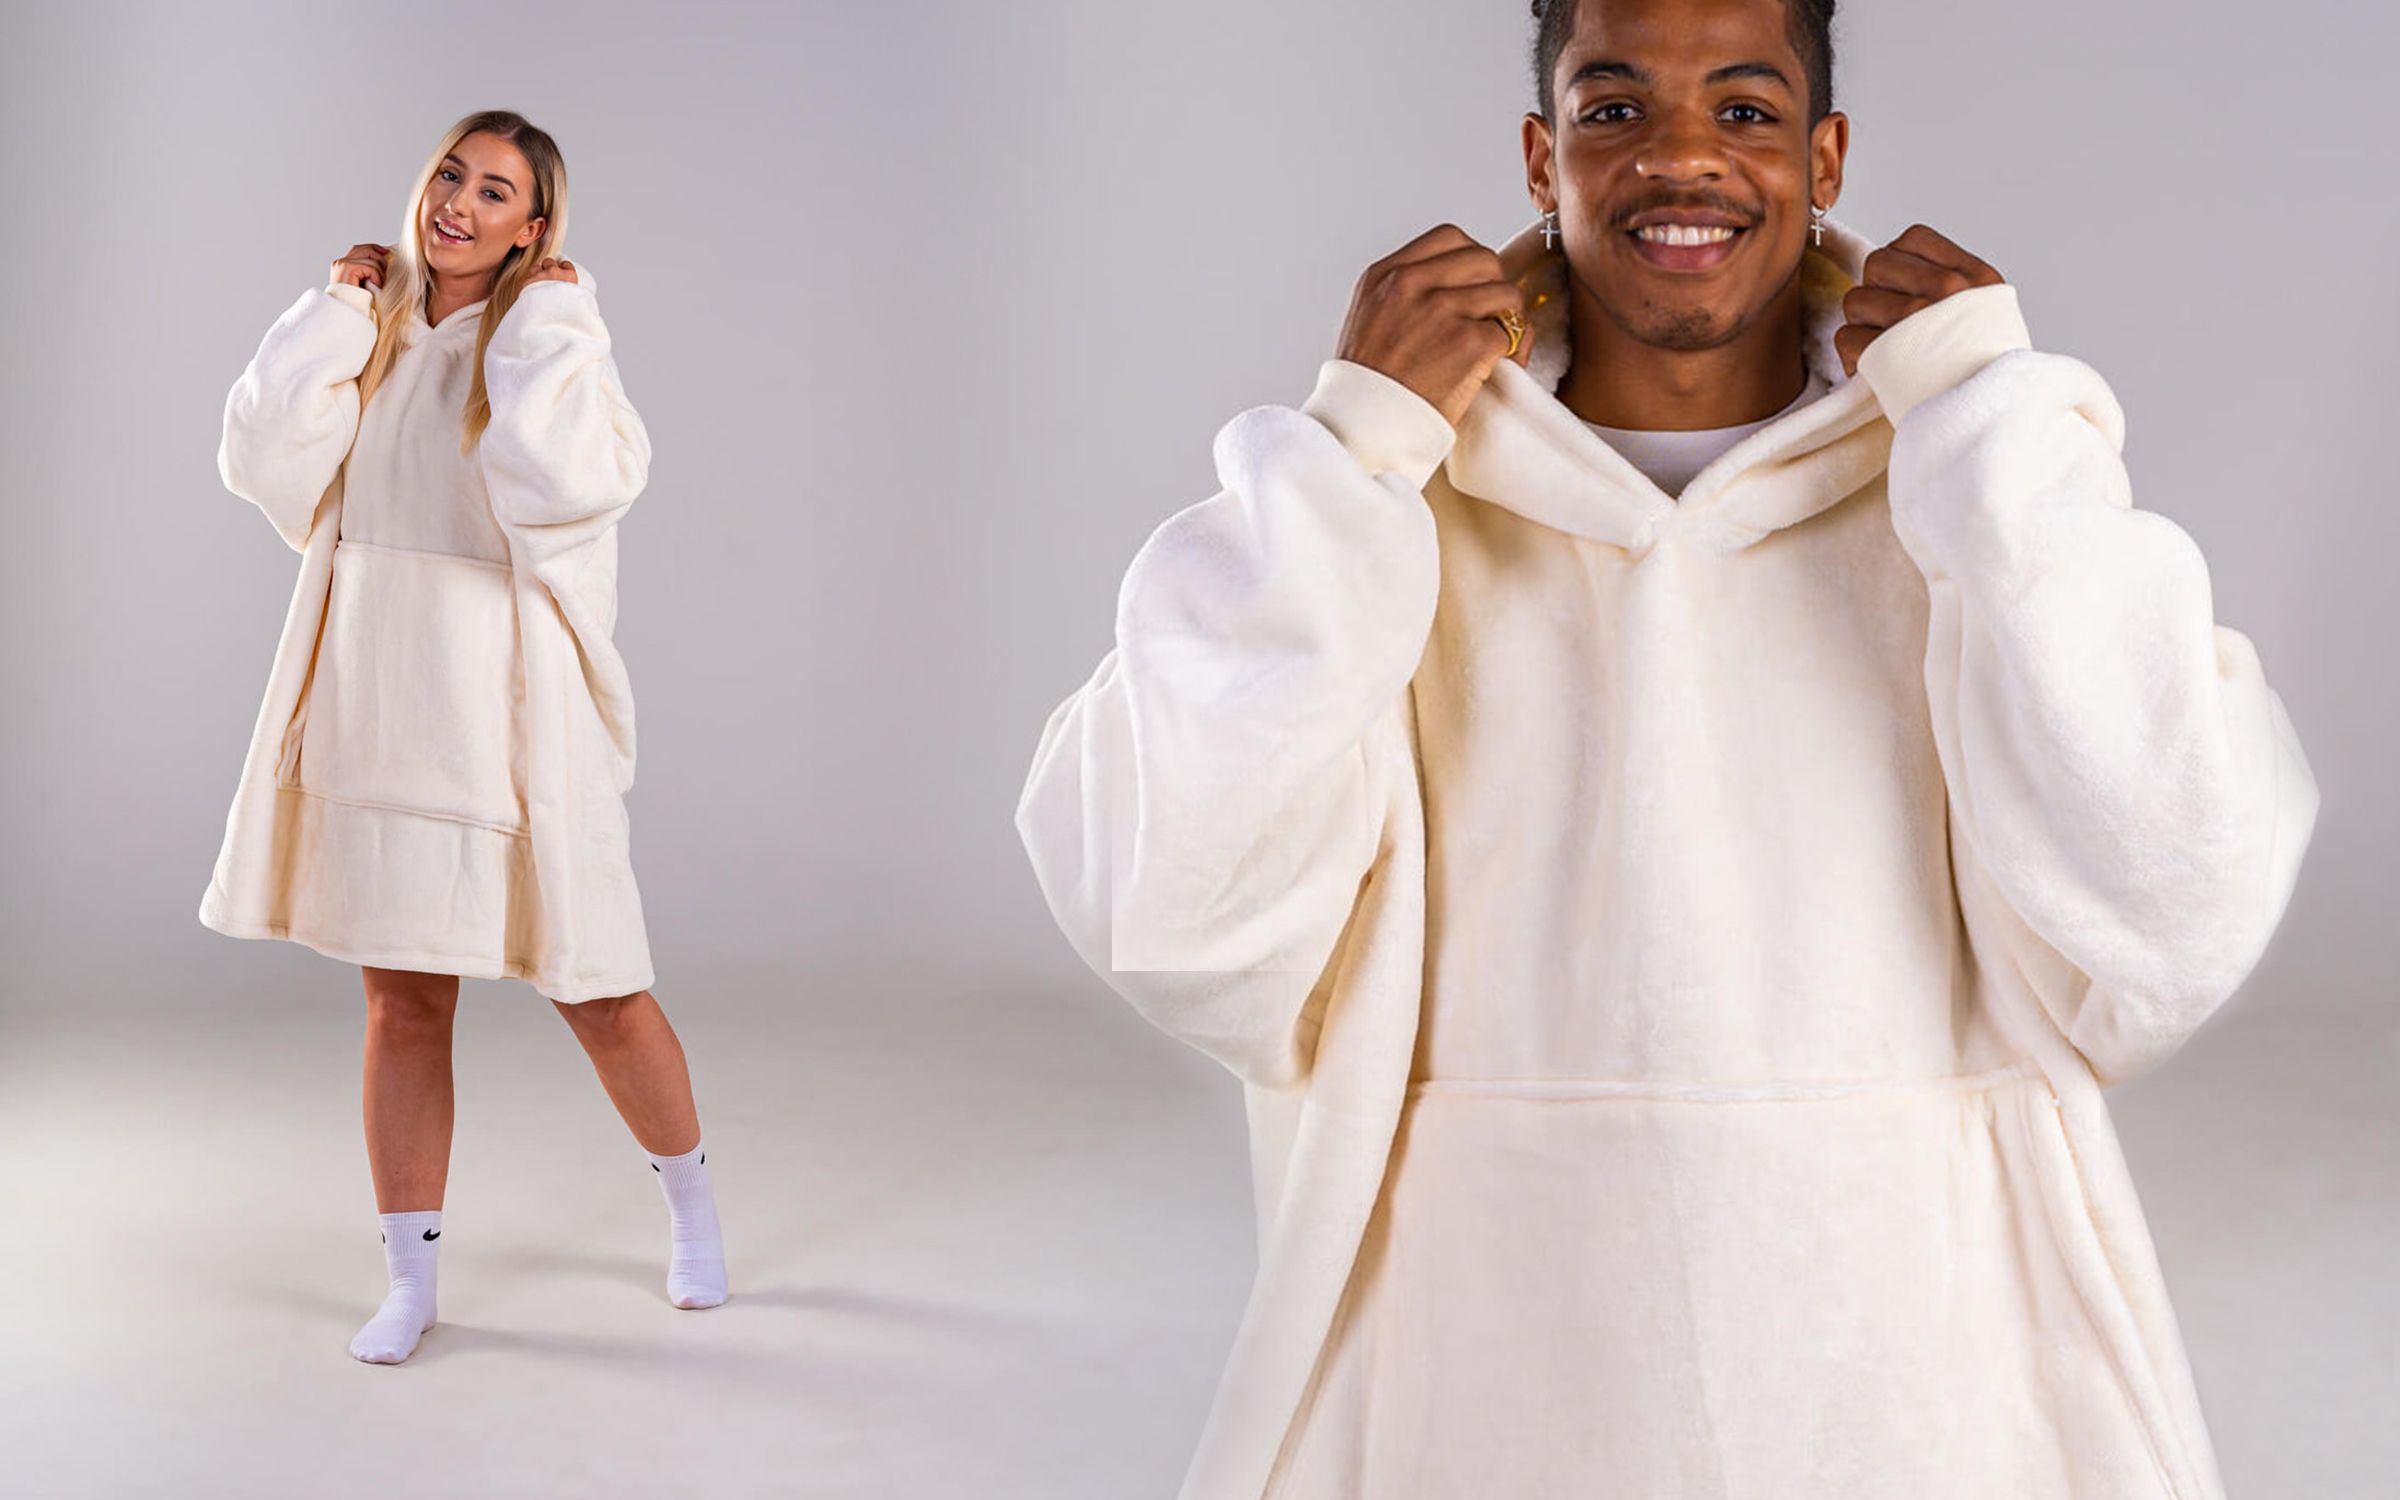 John Lewis Kids' Camo Long Oversized Fleece Blanket Hoodie, Blue at John  Lewis & Partners